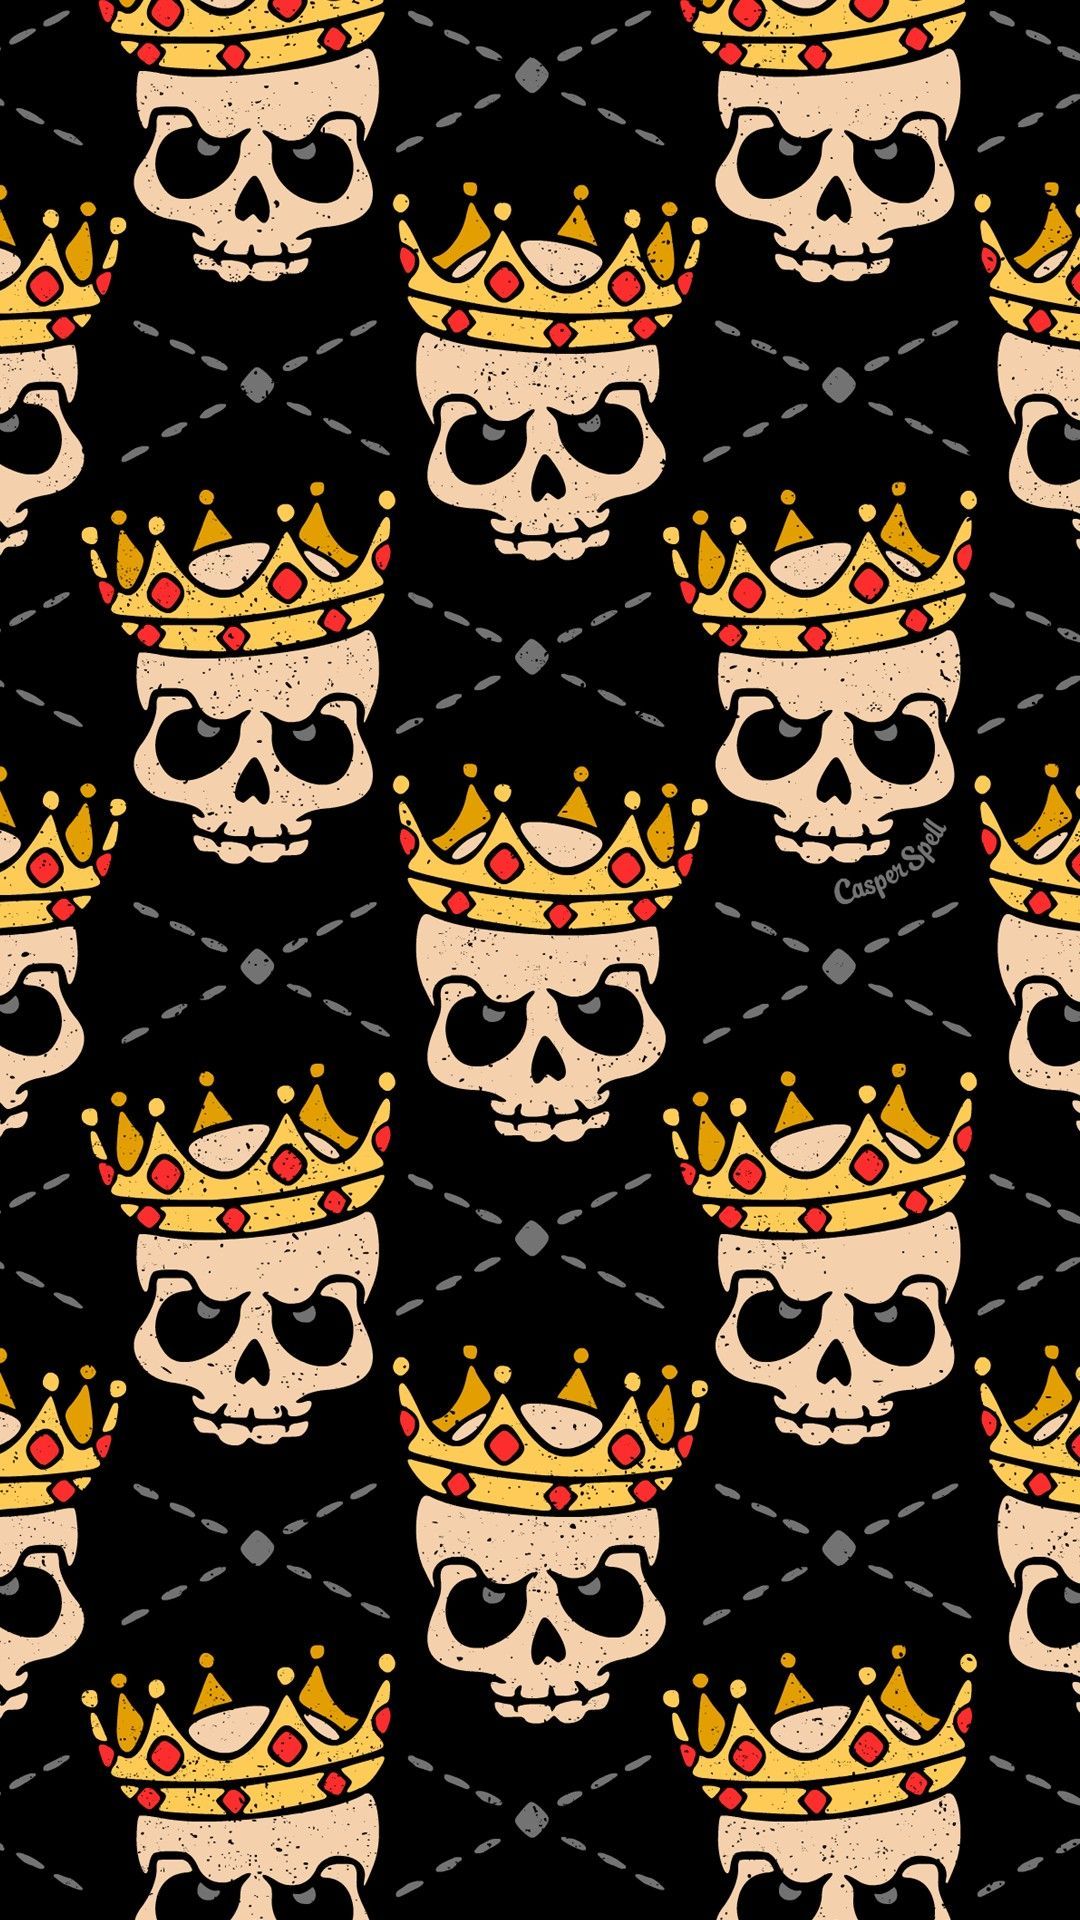 Skull Royal Royalty King Repeat Pattern Wallpaper Screensaver phone surface design art illustration drawi. Halloween wallpaper, Skull wallpaper, Android wallpaper